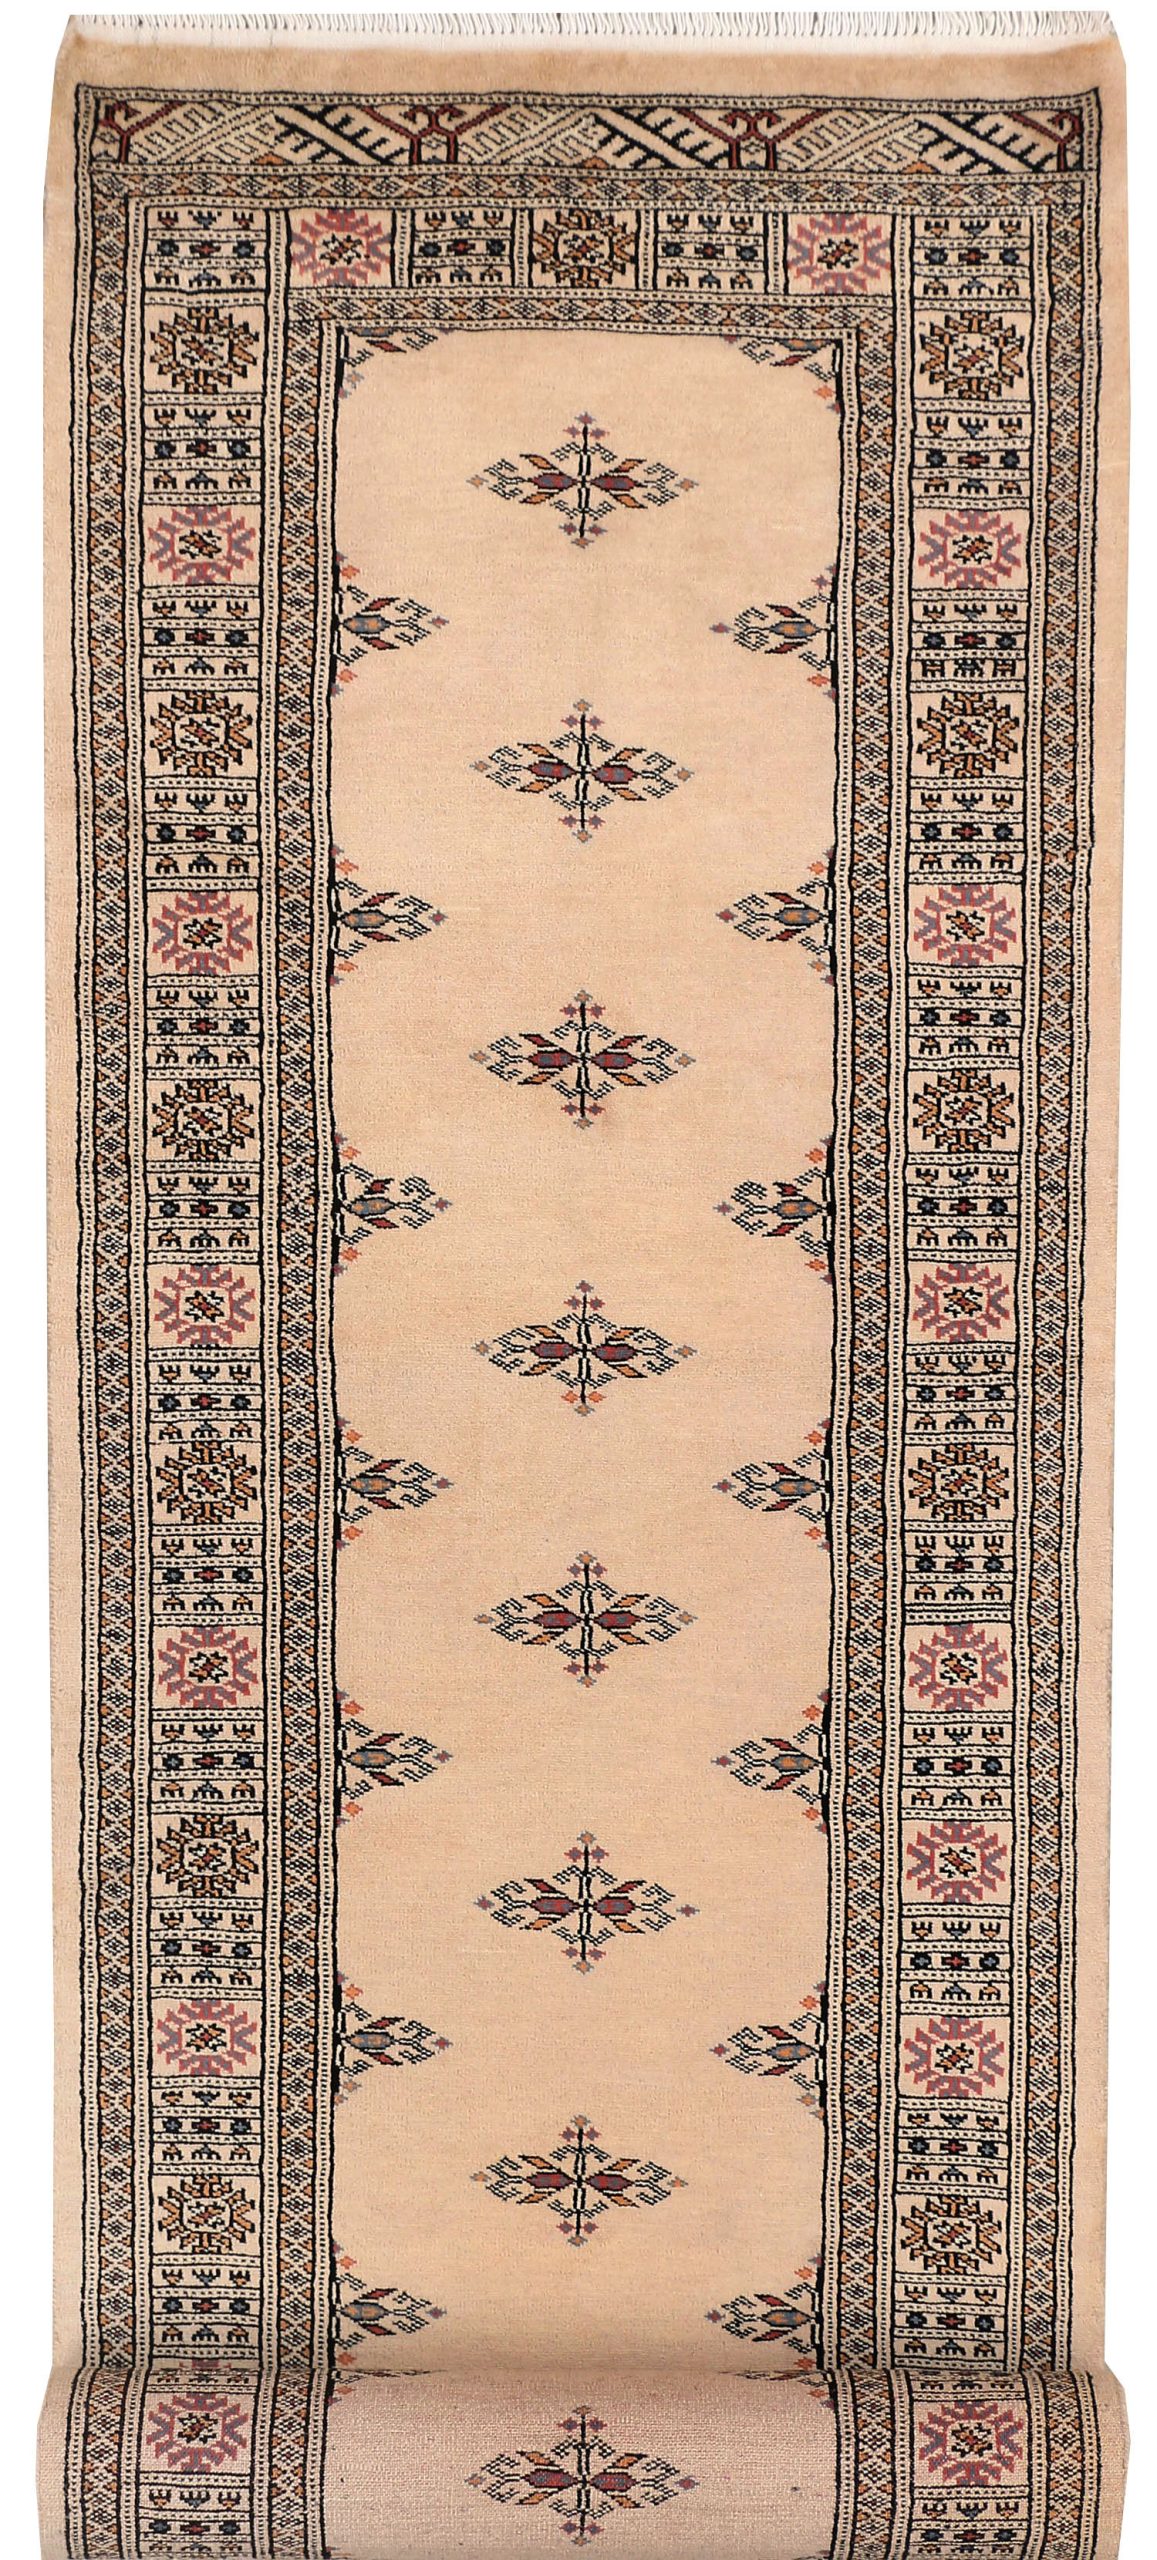 Carpet History